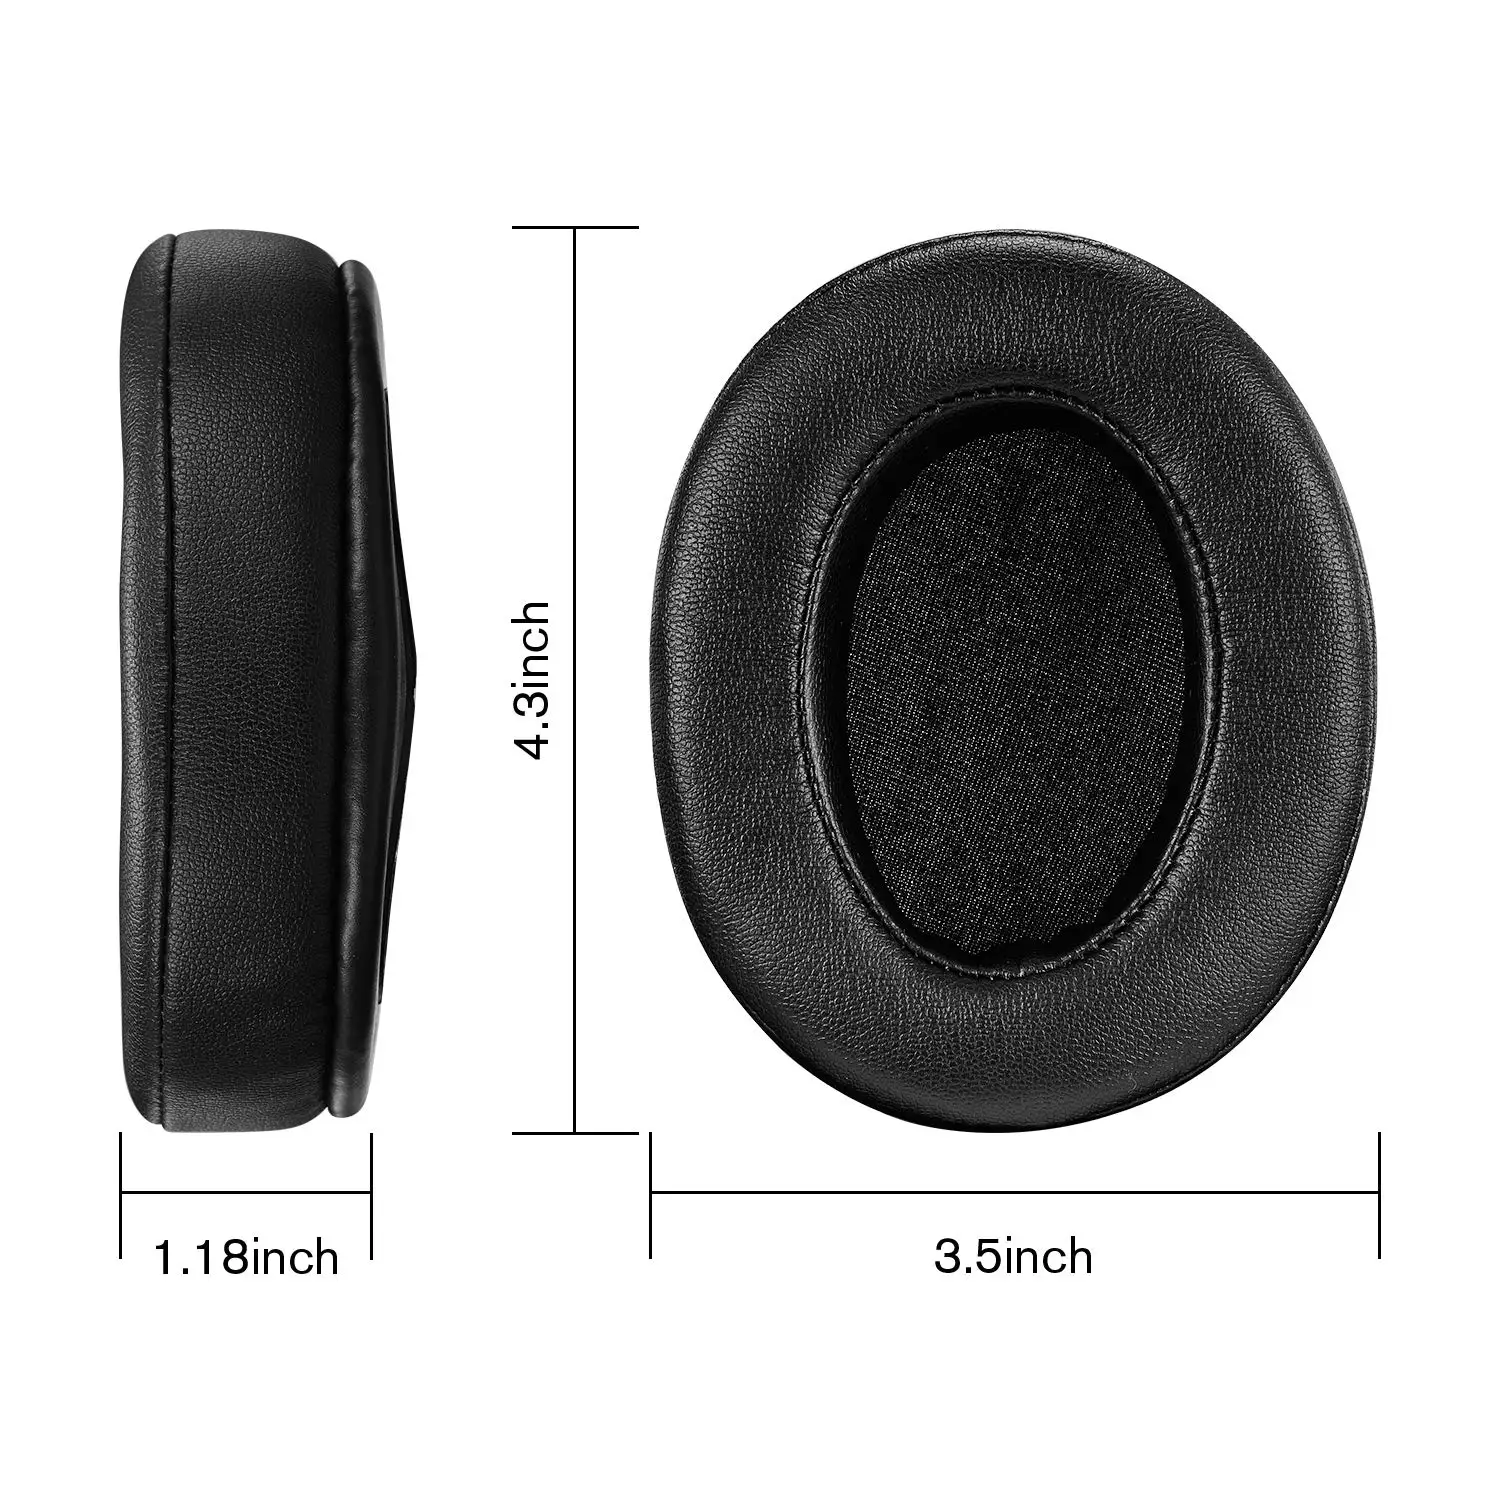 Ear Pads Ear Cushion Replacement for Audio Technica ATH M50X / M50 / M40X / M40 / Turtle Beach/HyperX/Sennheiser and More